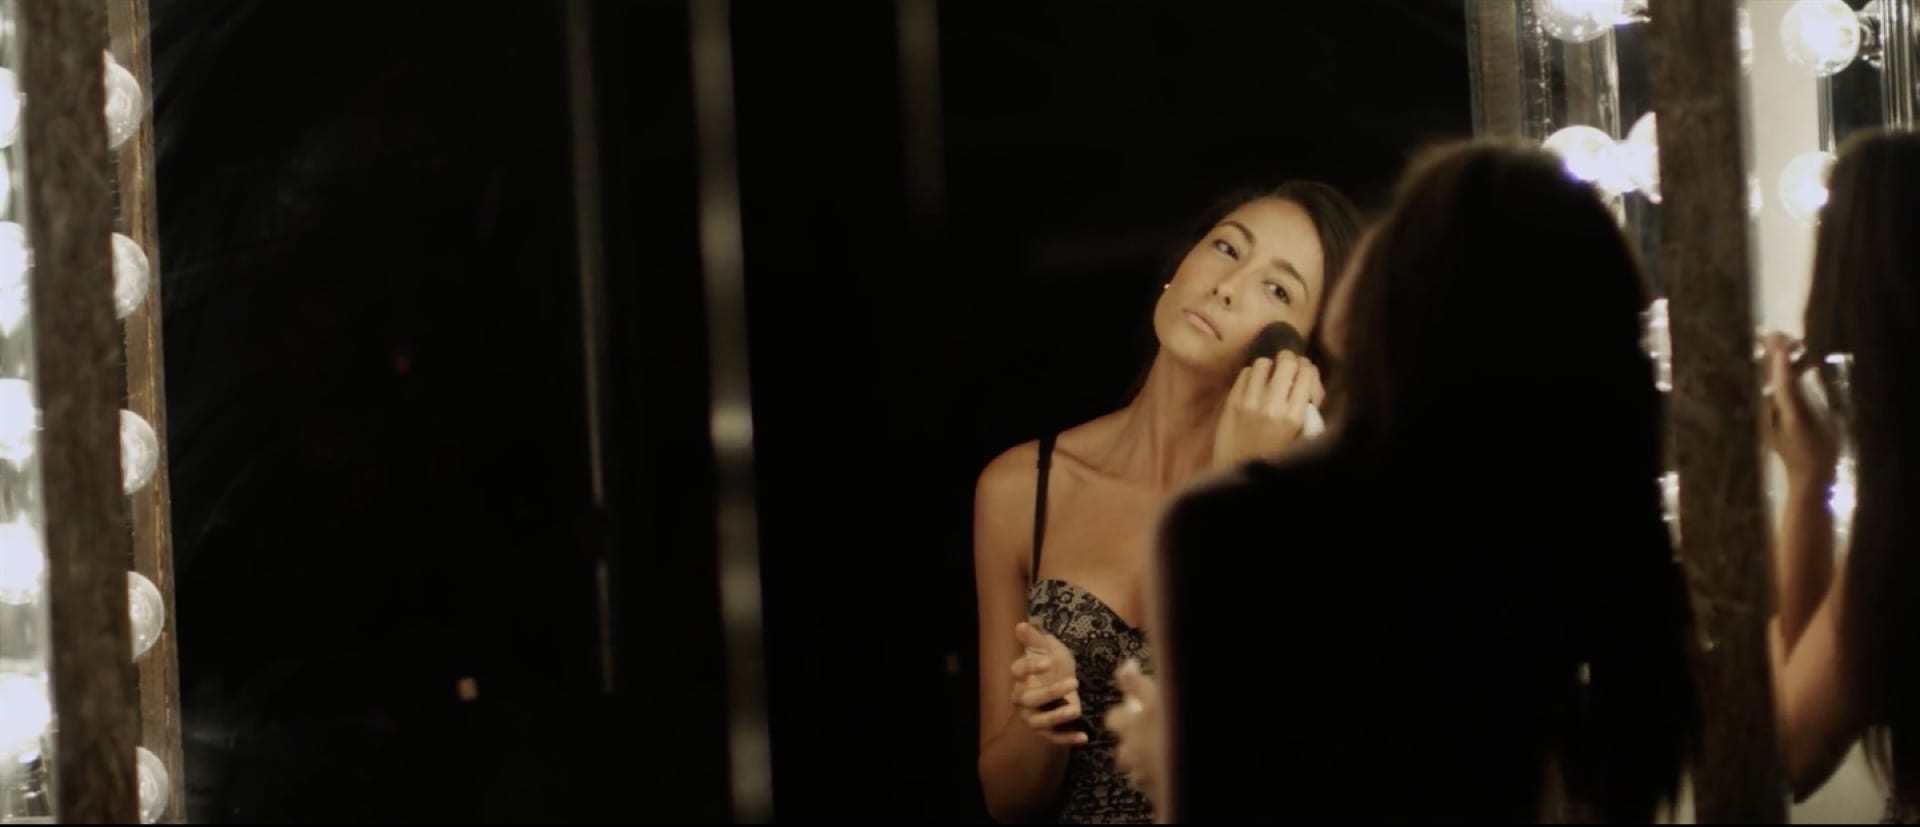 Scene shot from Classic: Yrma Perdomo applying makeup.